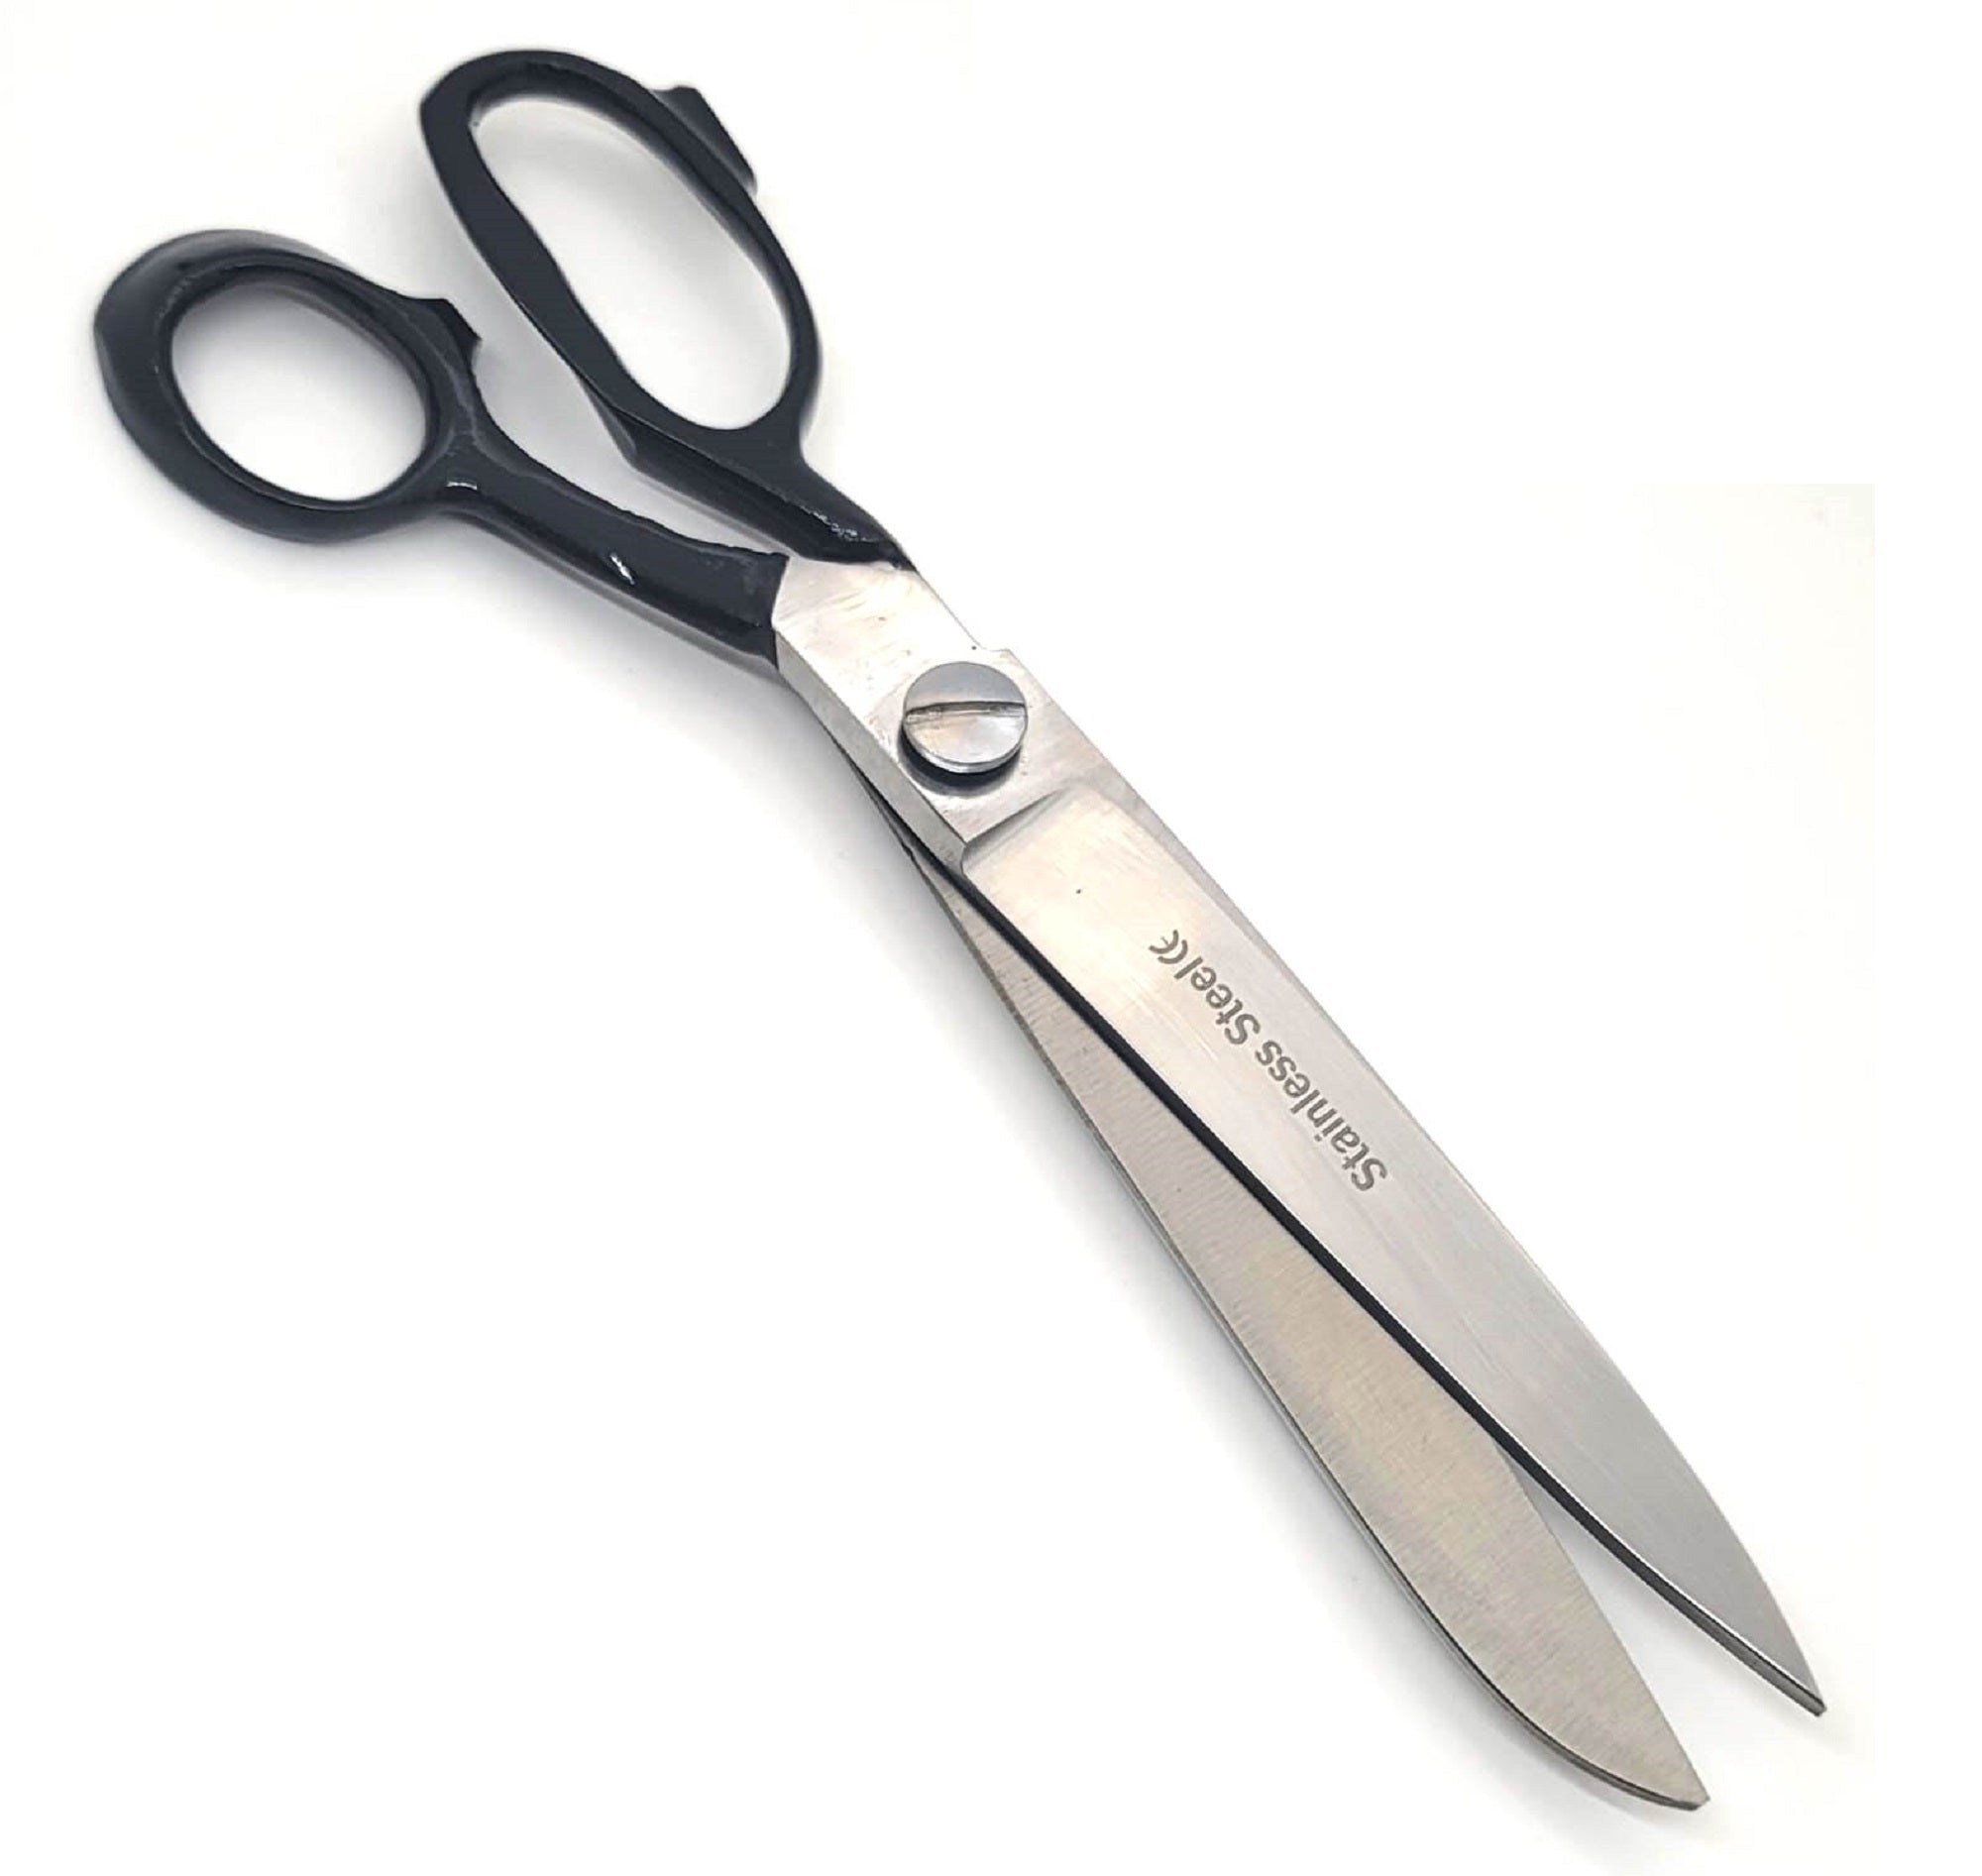 Best Sewing Scissors - Leather Craft Scissors - Comfortable Heavy